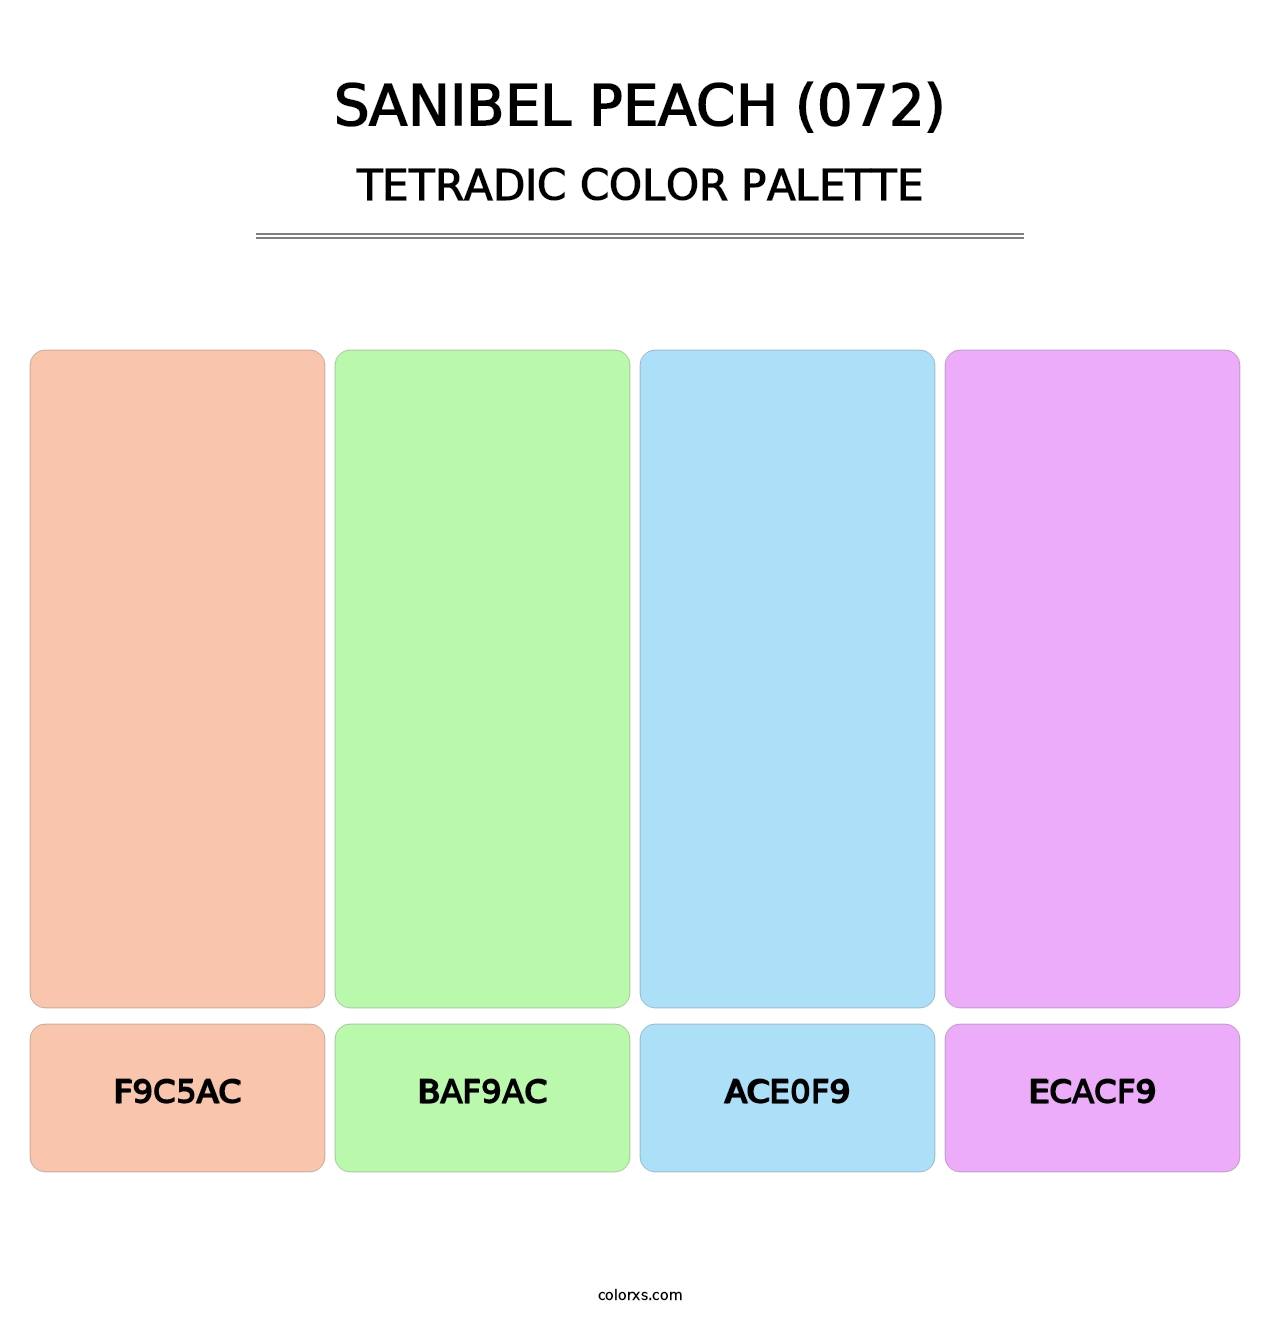 Sanibel Peach (072) - Tetradic Color Palette